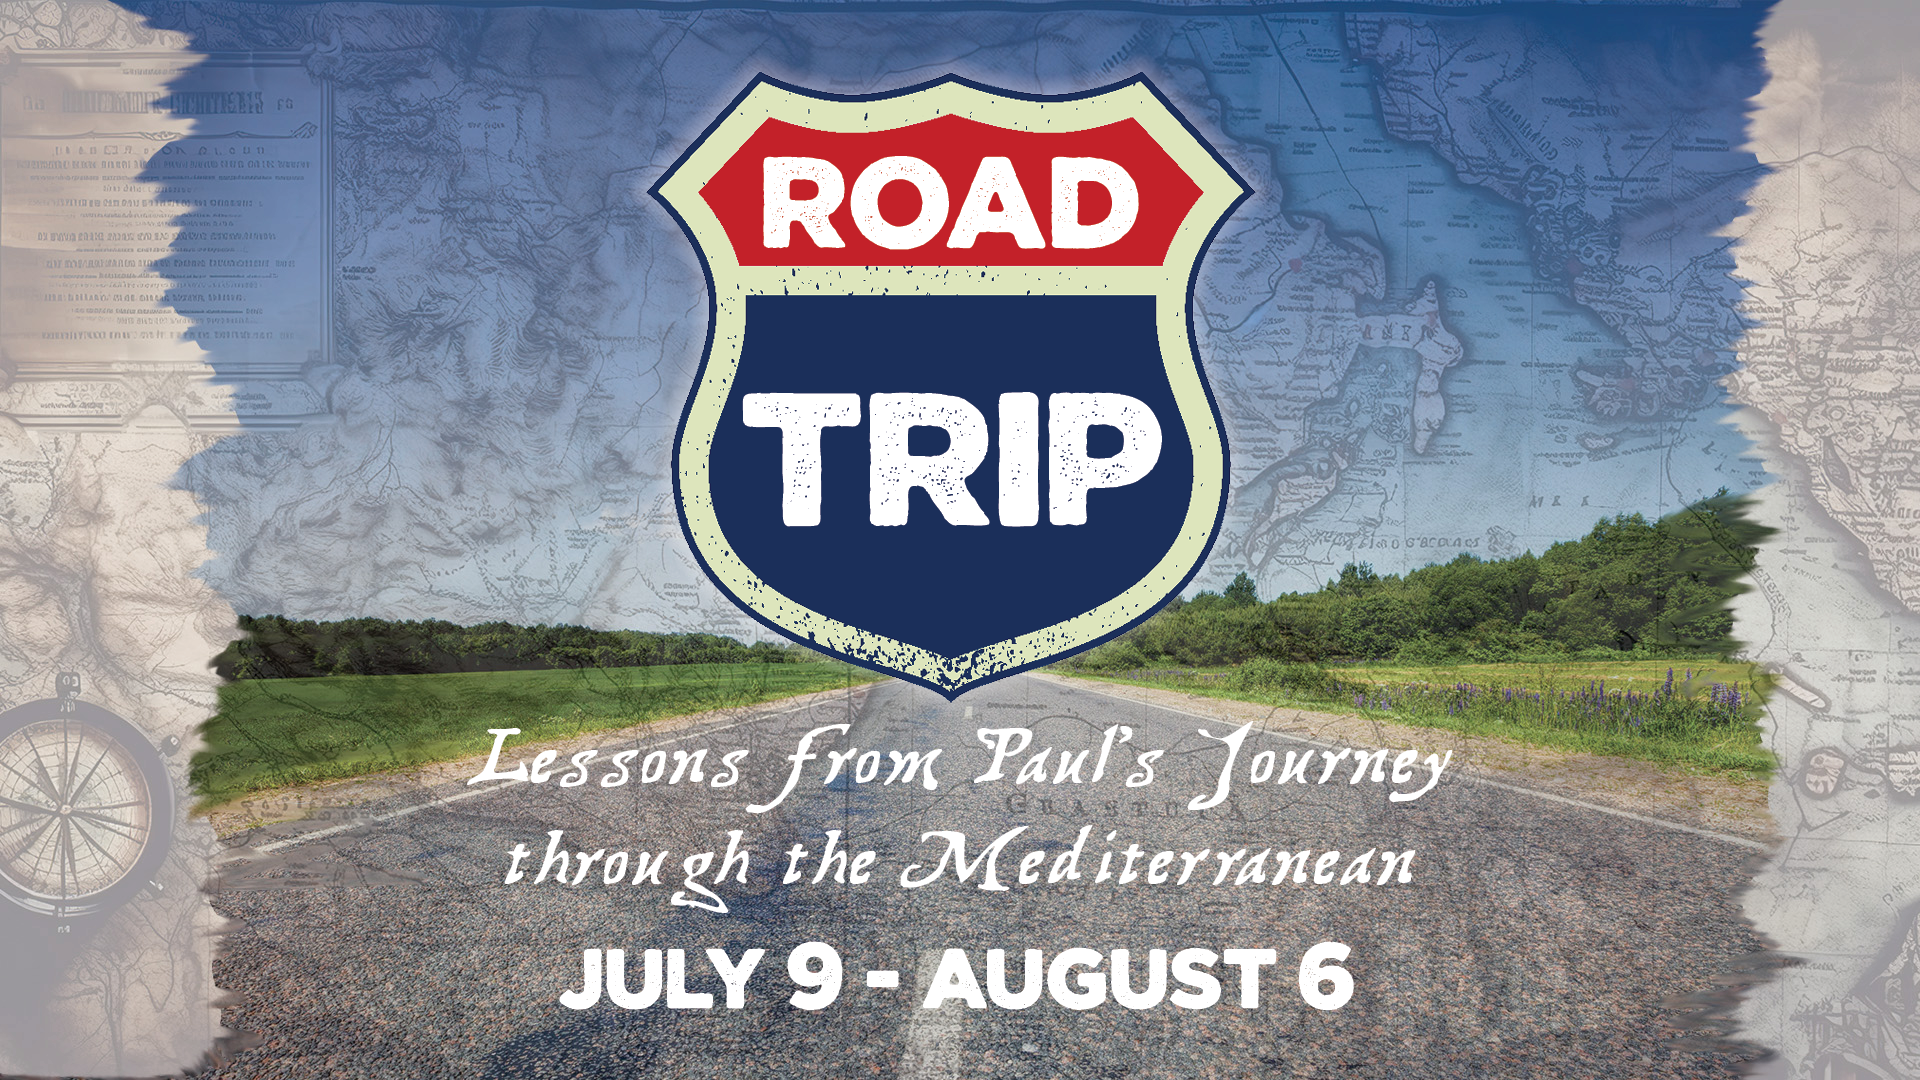 road trip sermon series july 9 - august 6